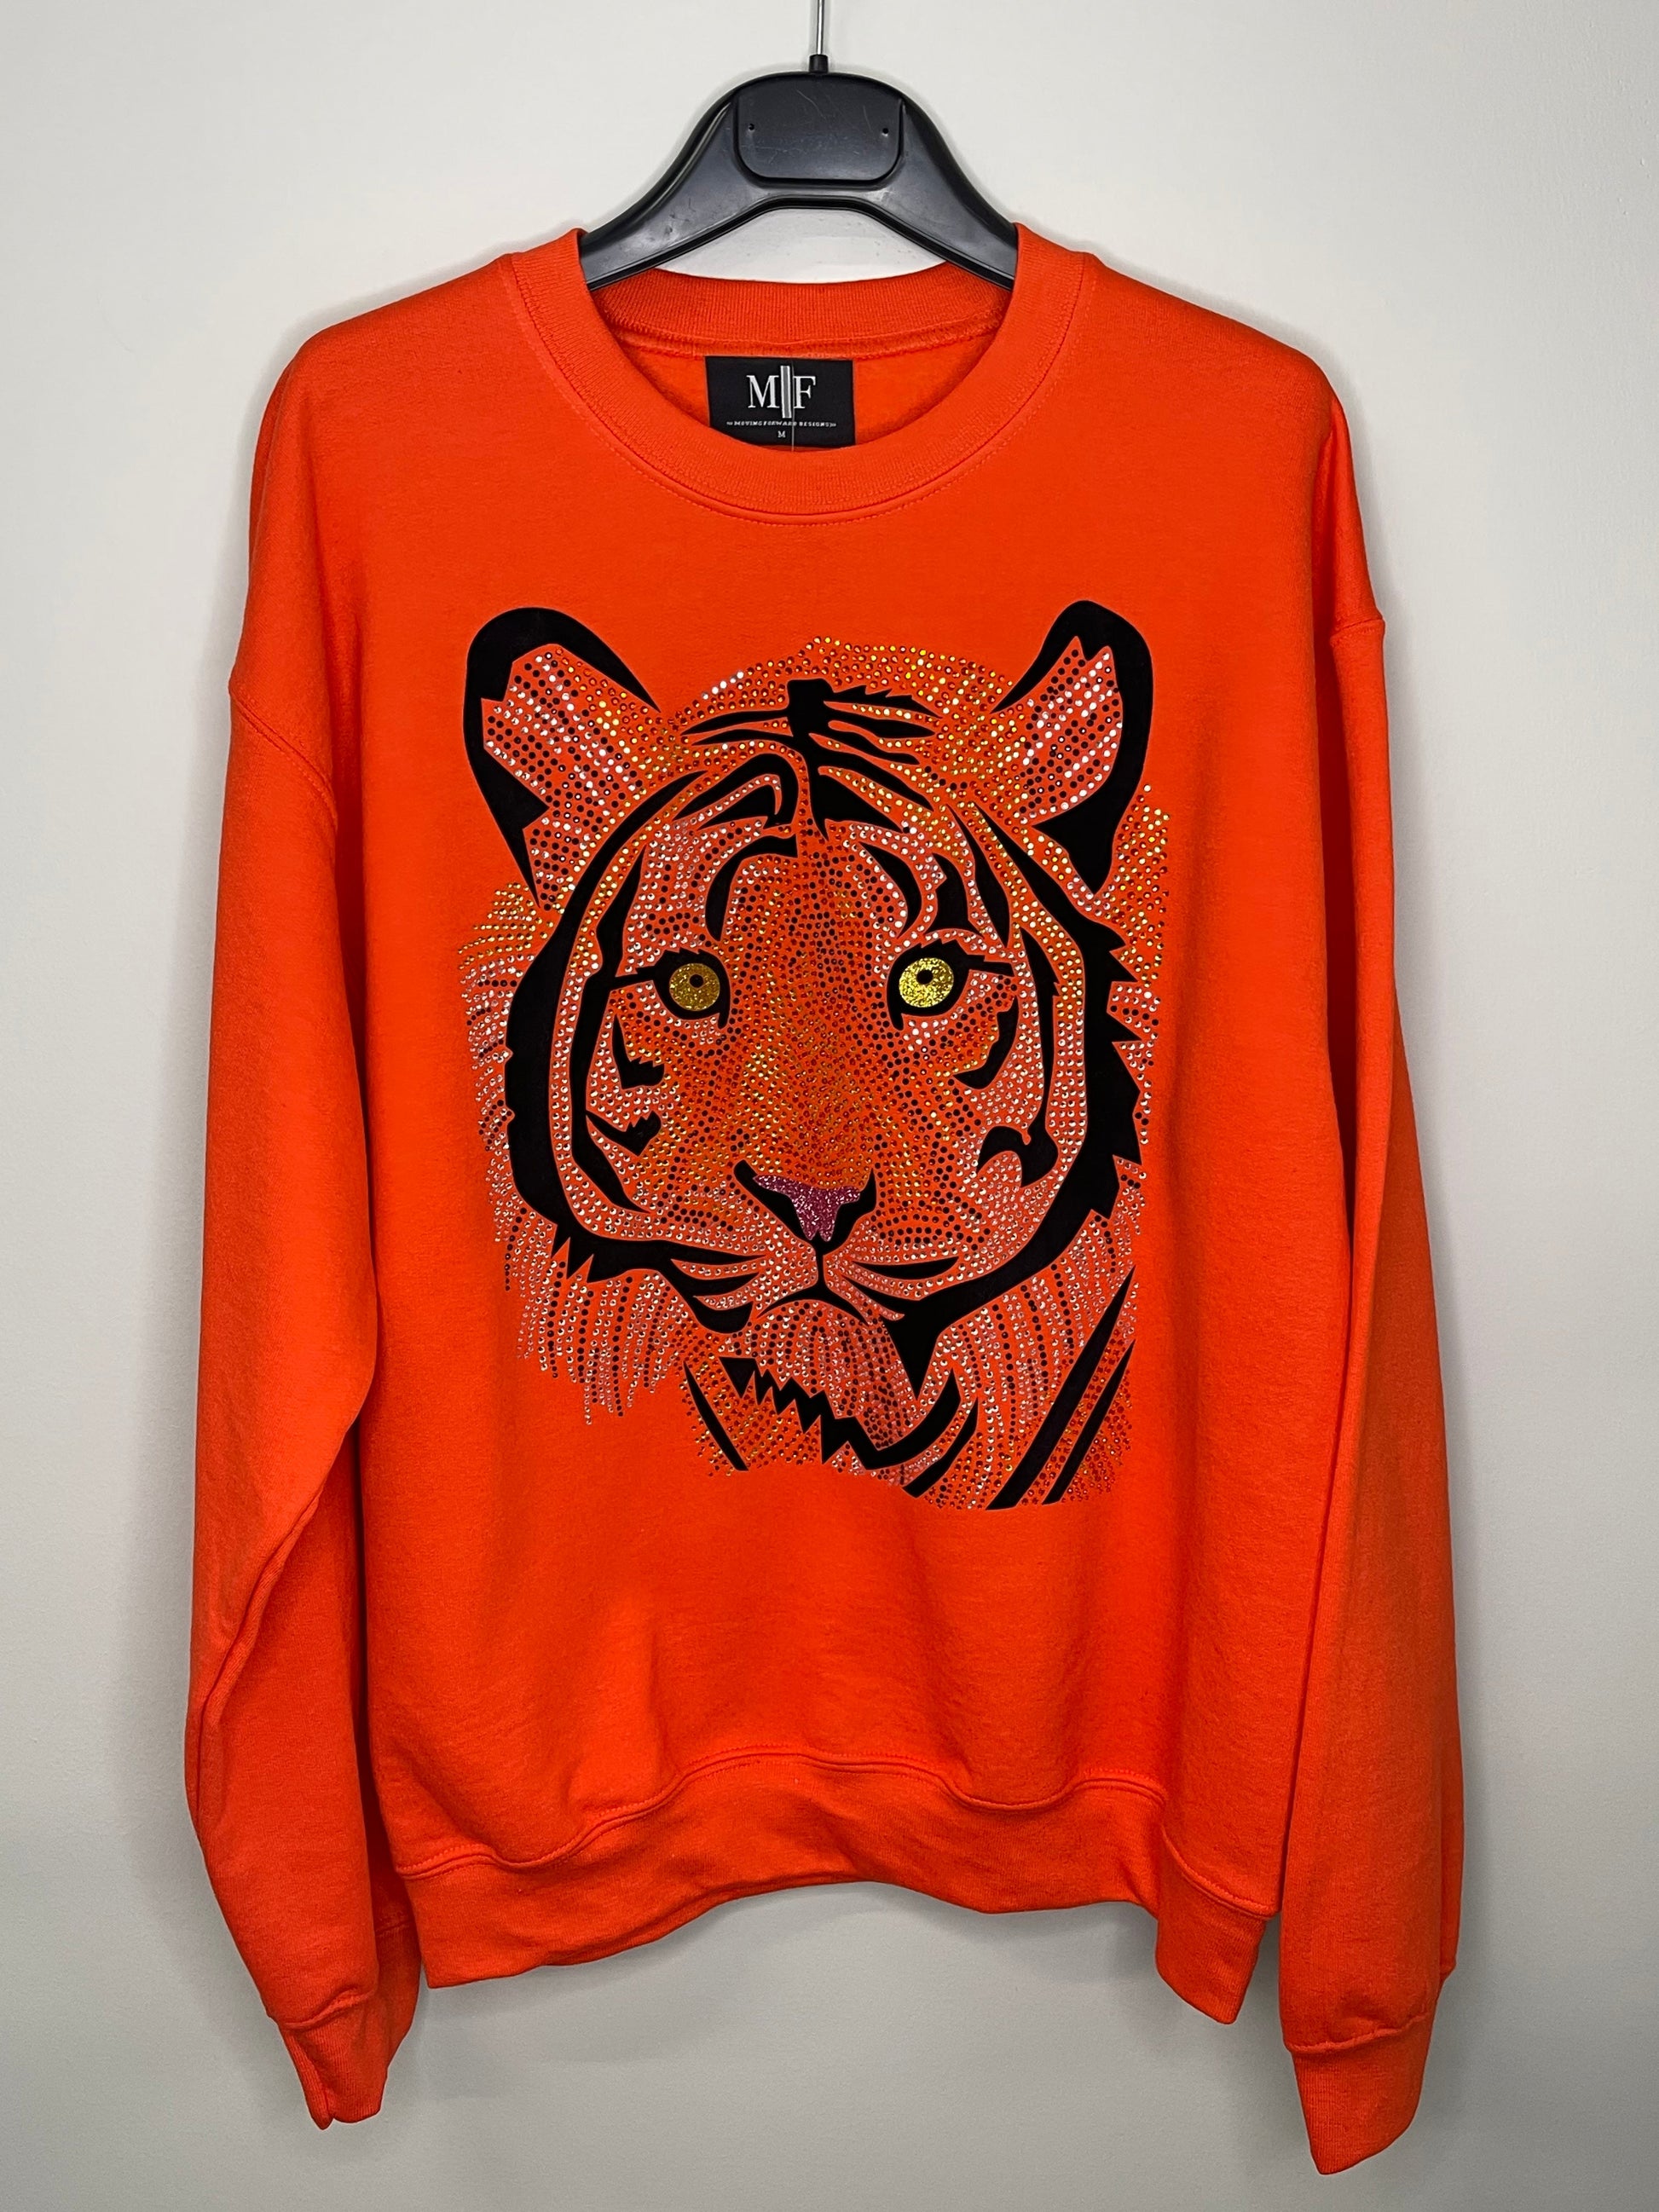 Sweatshirt, Crewneck Orange, Tiger Face – Moving Forward Designs